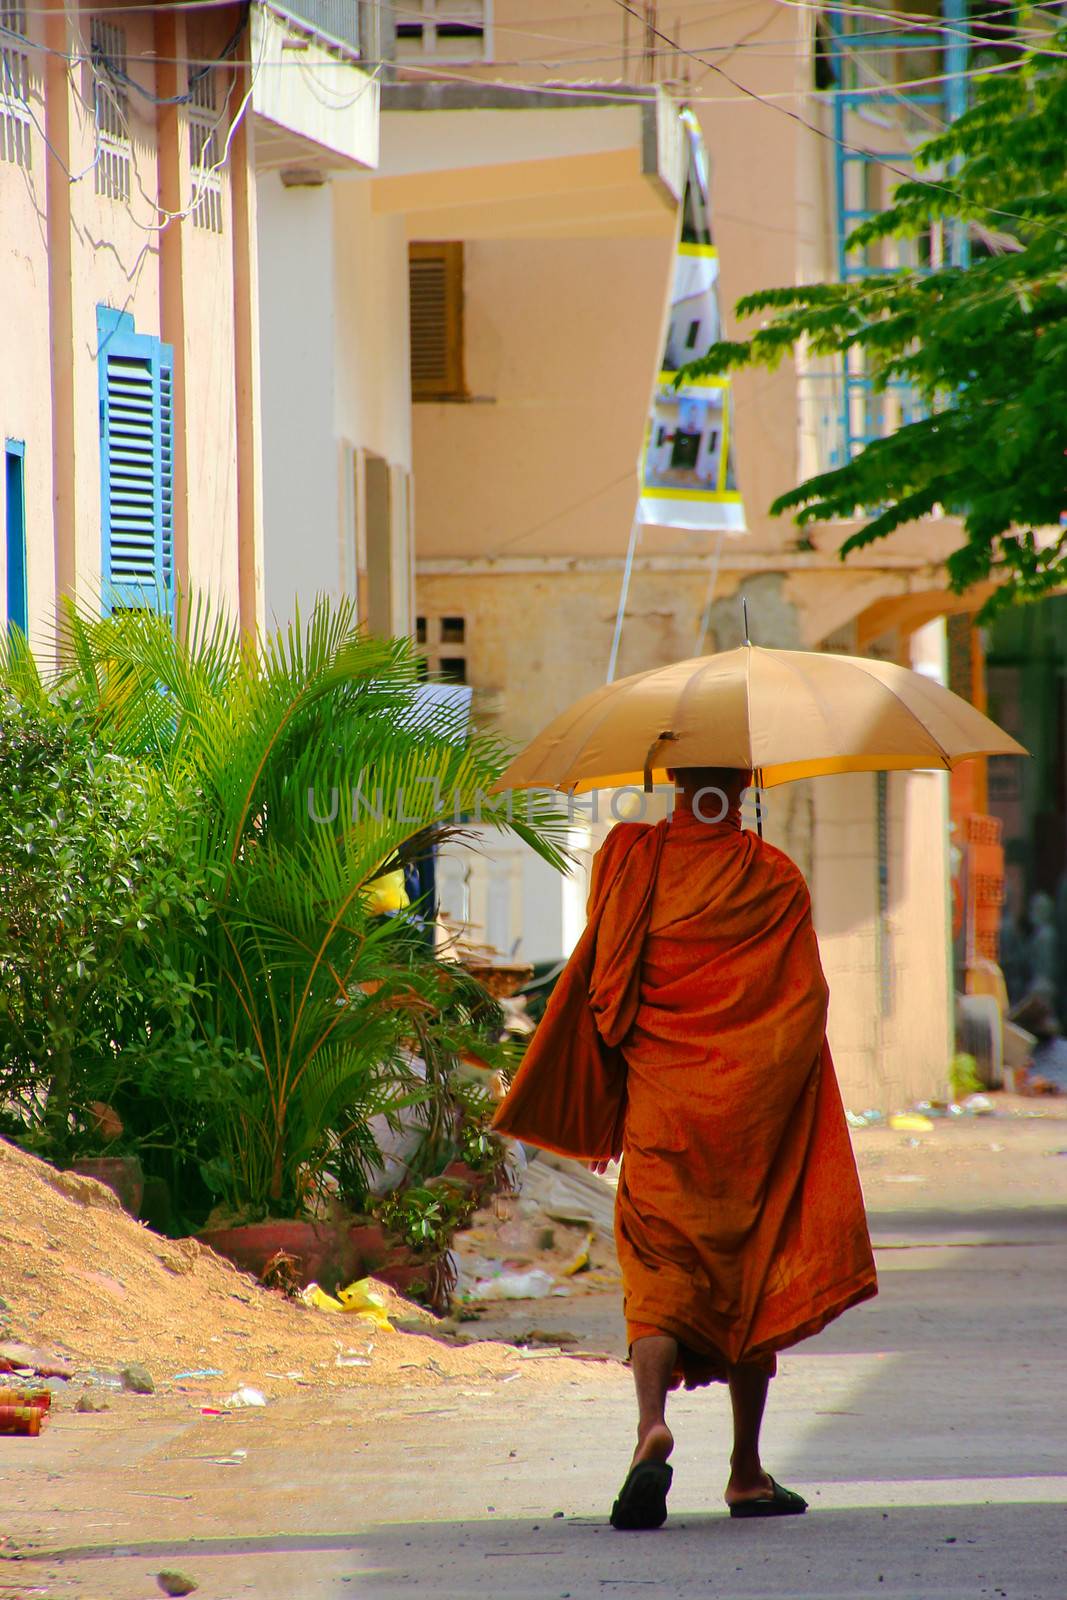 Buddist monk in Cambodia by tboyajiev